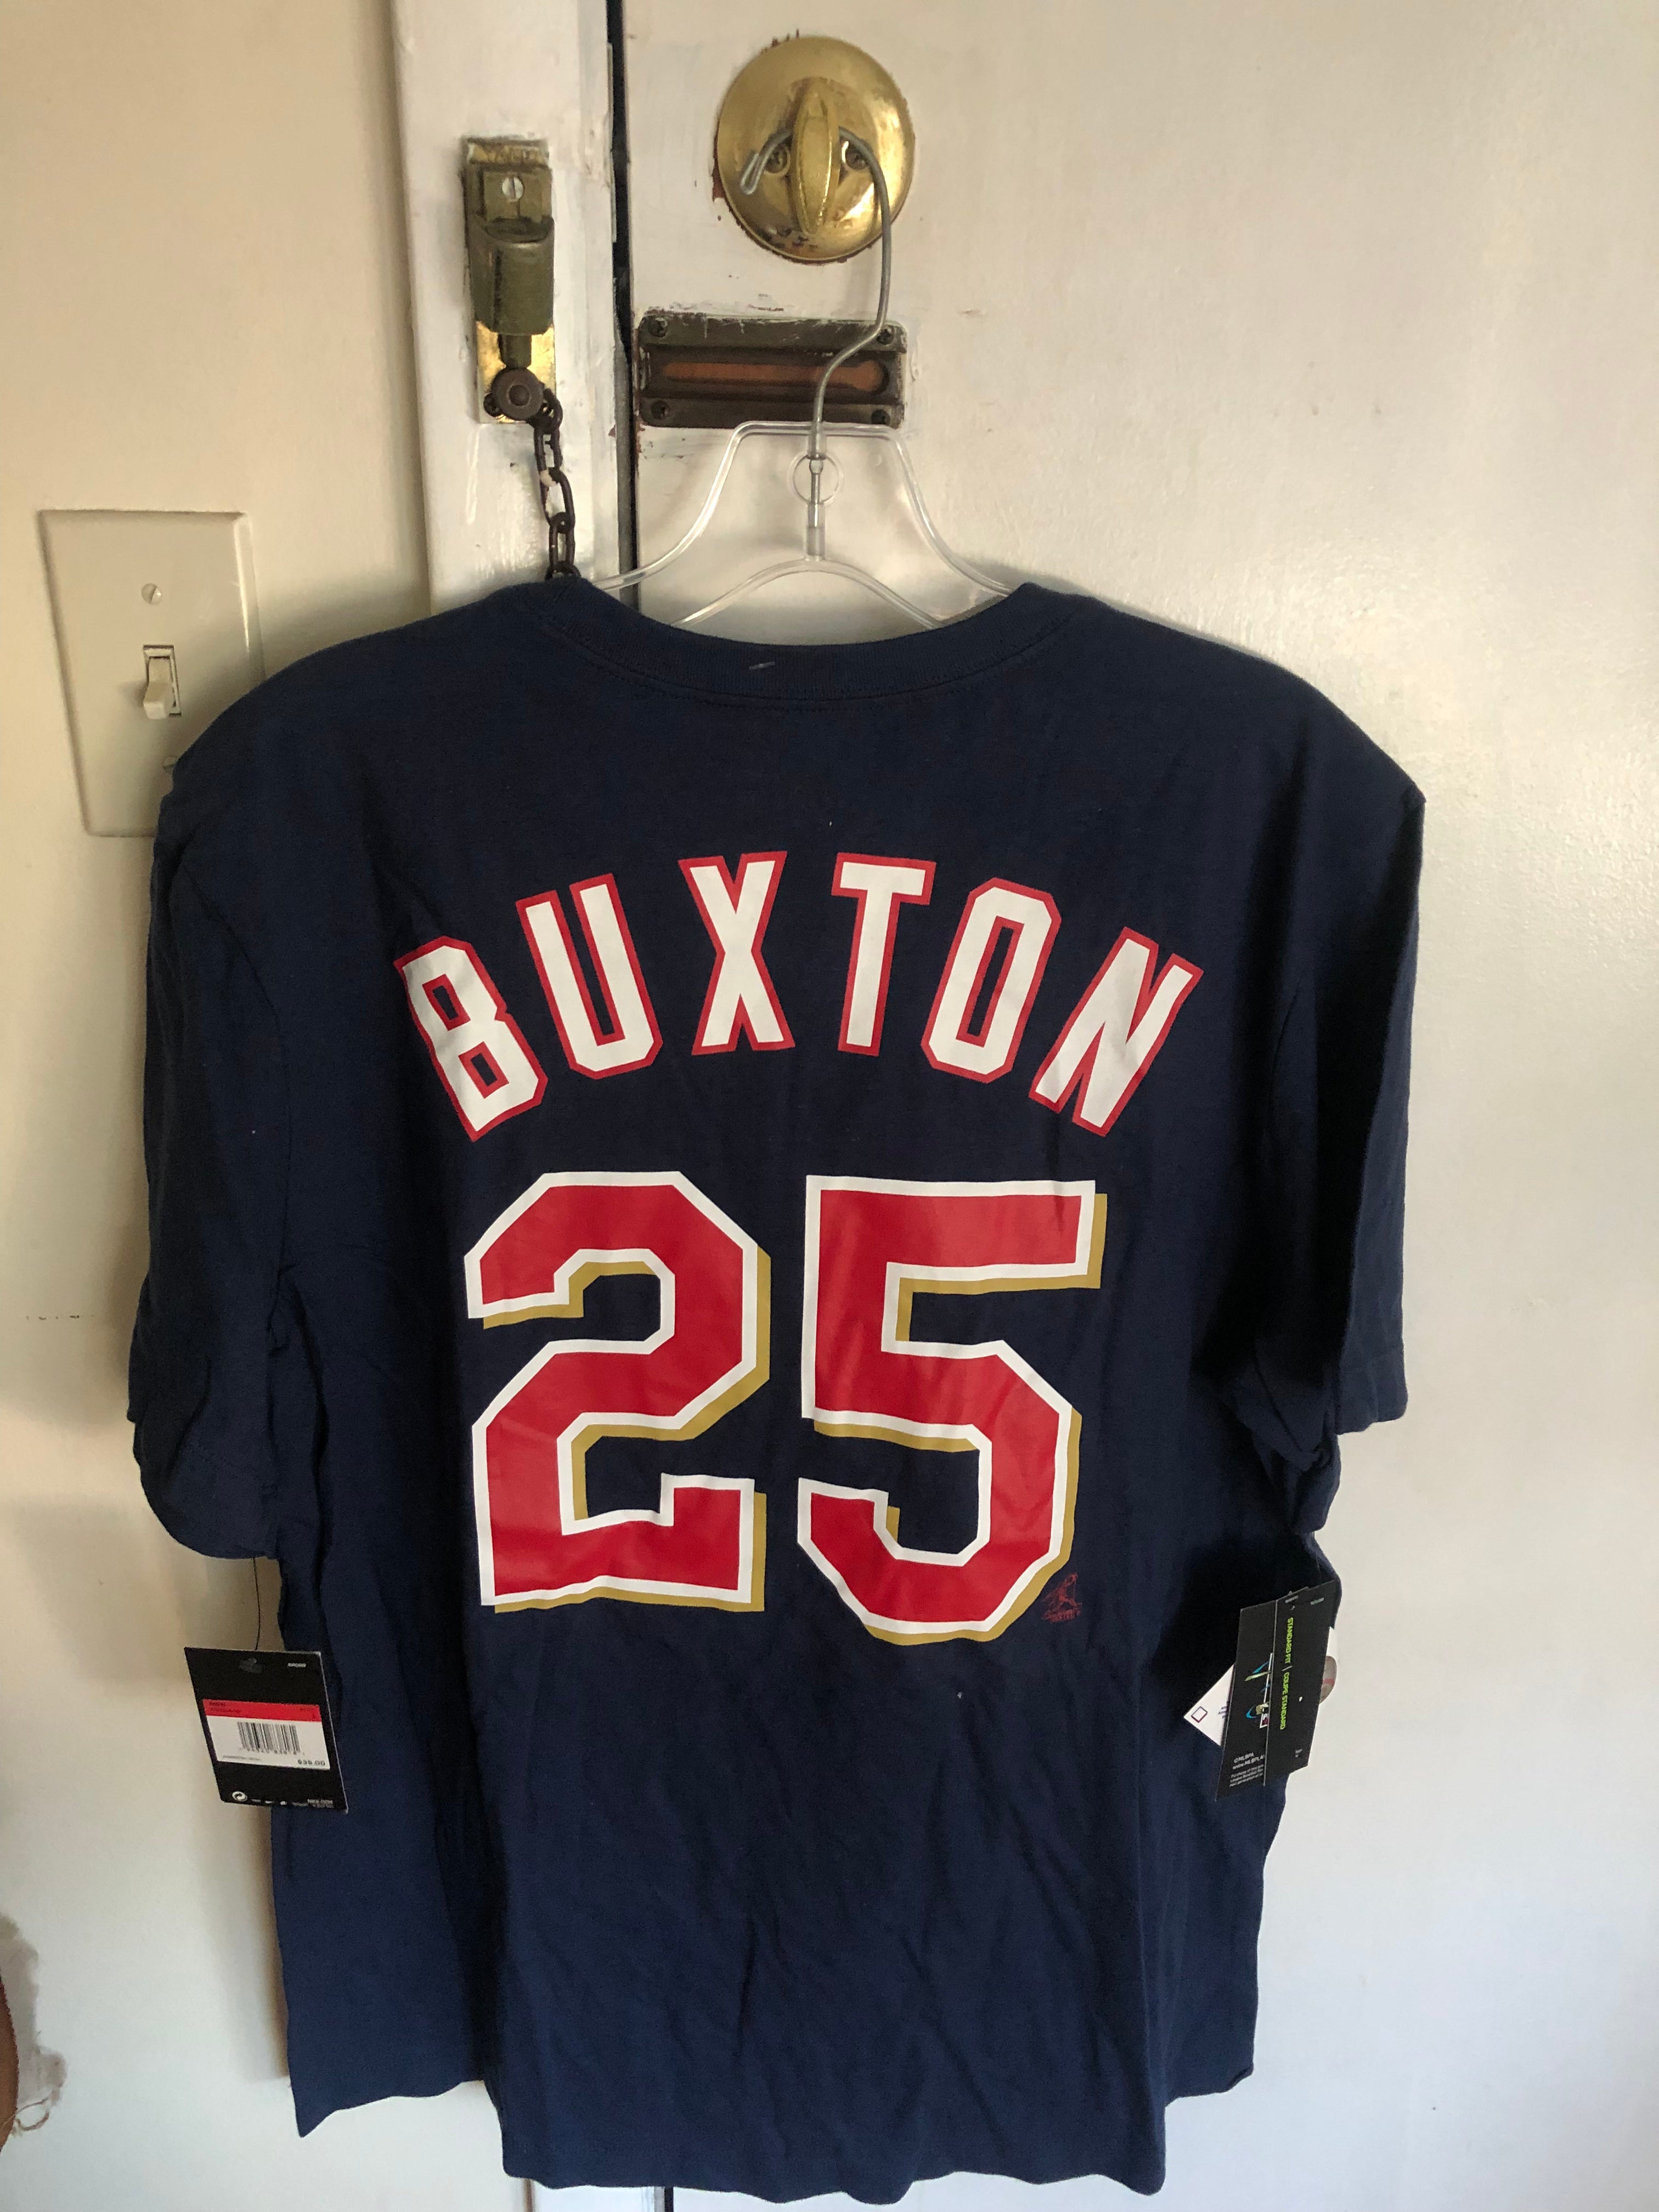 Byron Buxton Jersey, Byron Buxton Gear and Apparel